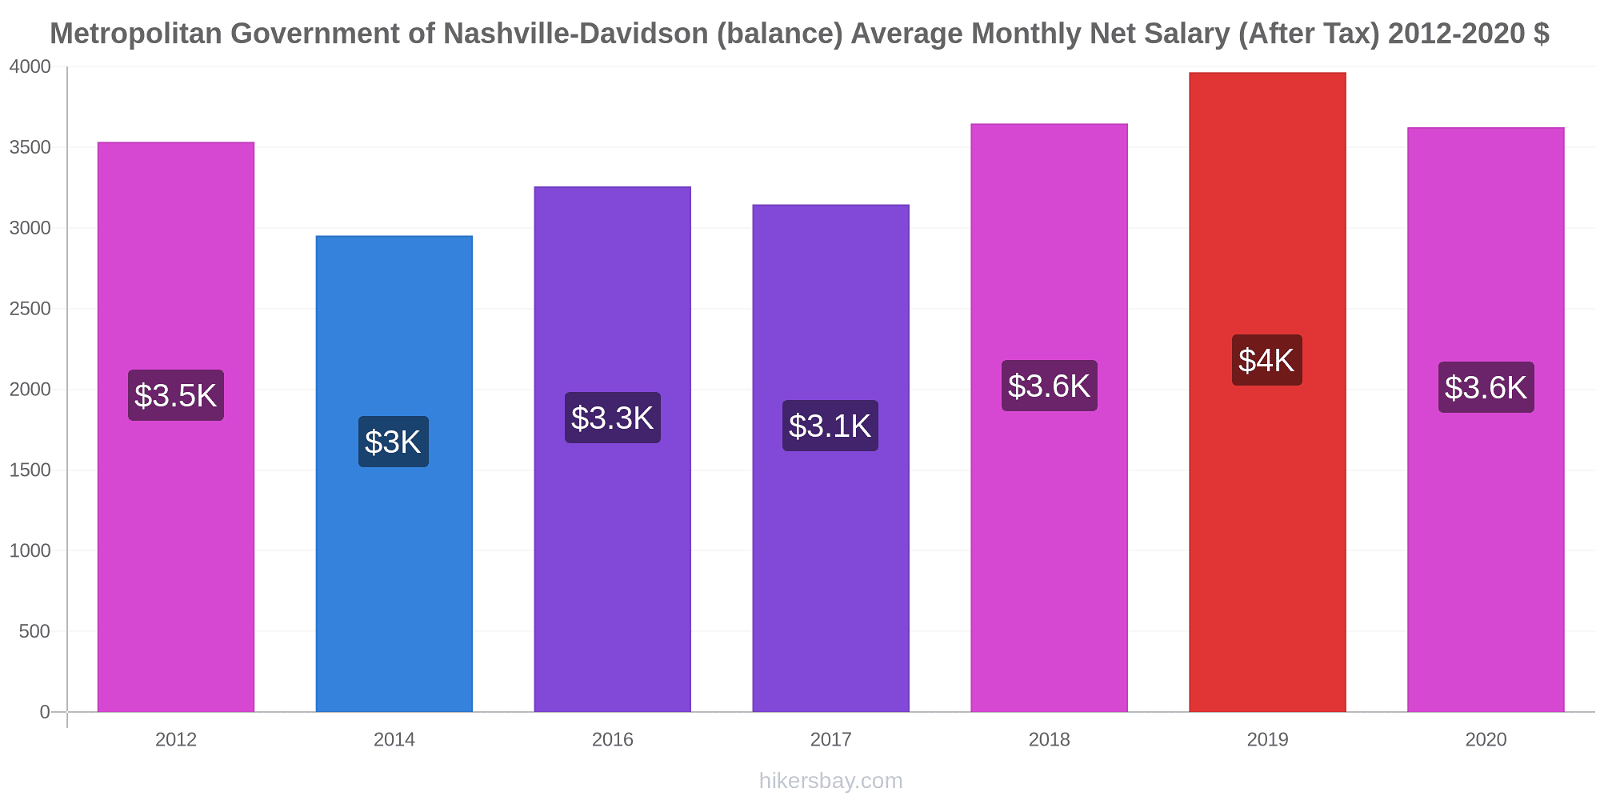 Metropolitan Government of Nashville-Davidson (balance) price changes Average Monthly Net Salary (After Tax) hikersbay.com